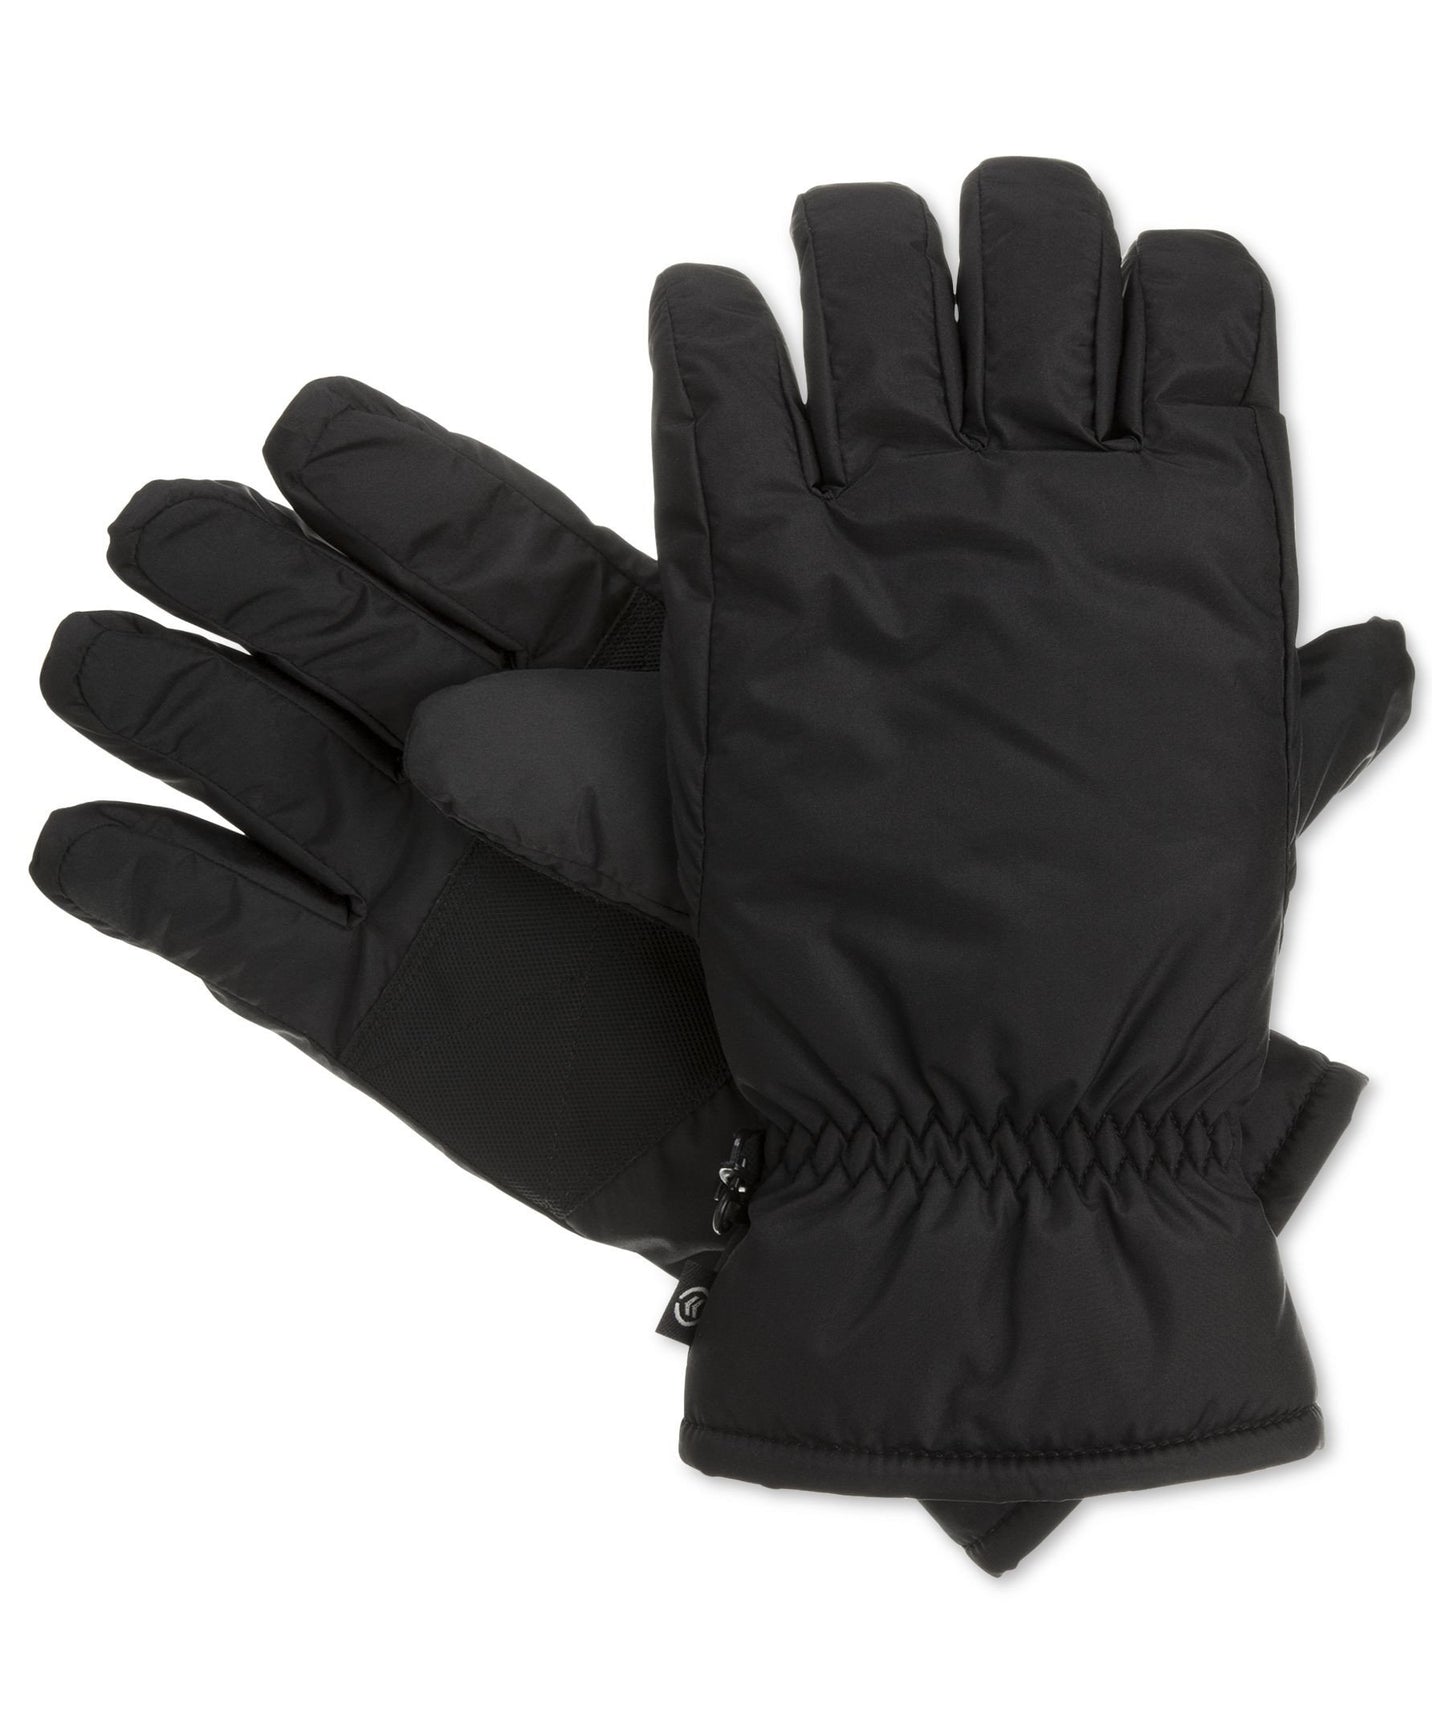 Isotoner Signature Black ULTRADRY Waterproof Ski Glove - XLarge